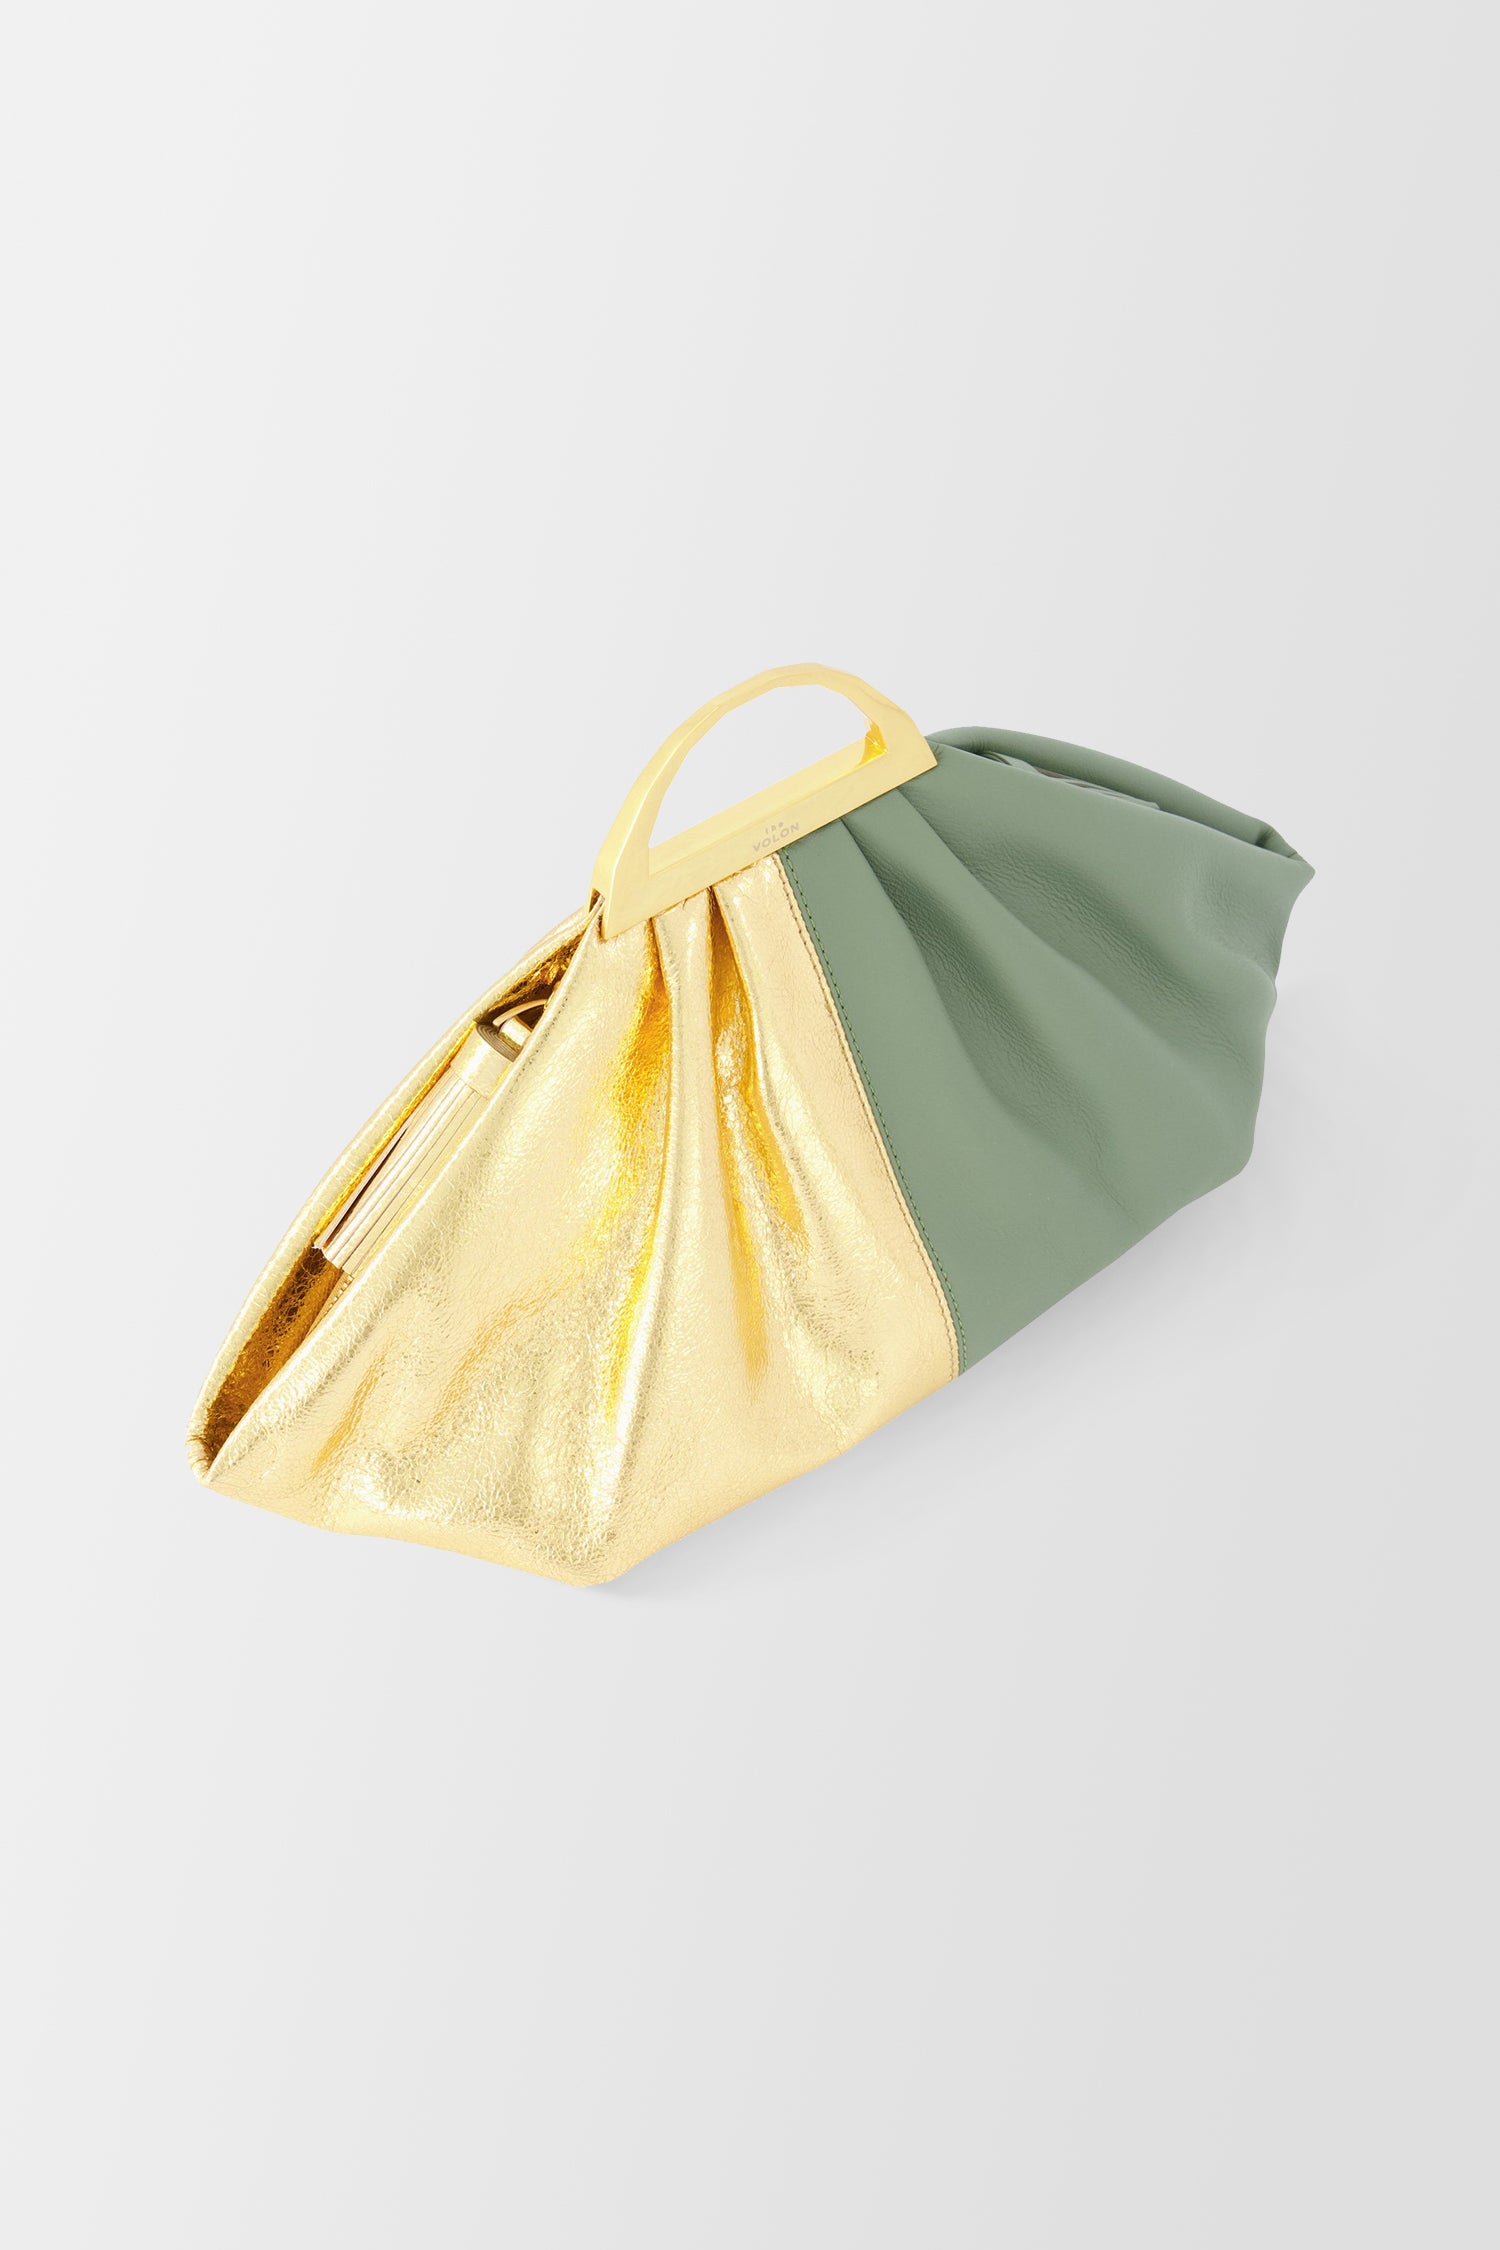 The Volon Gold/Military Gabi Mini Handbag